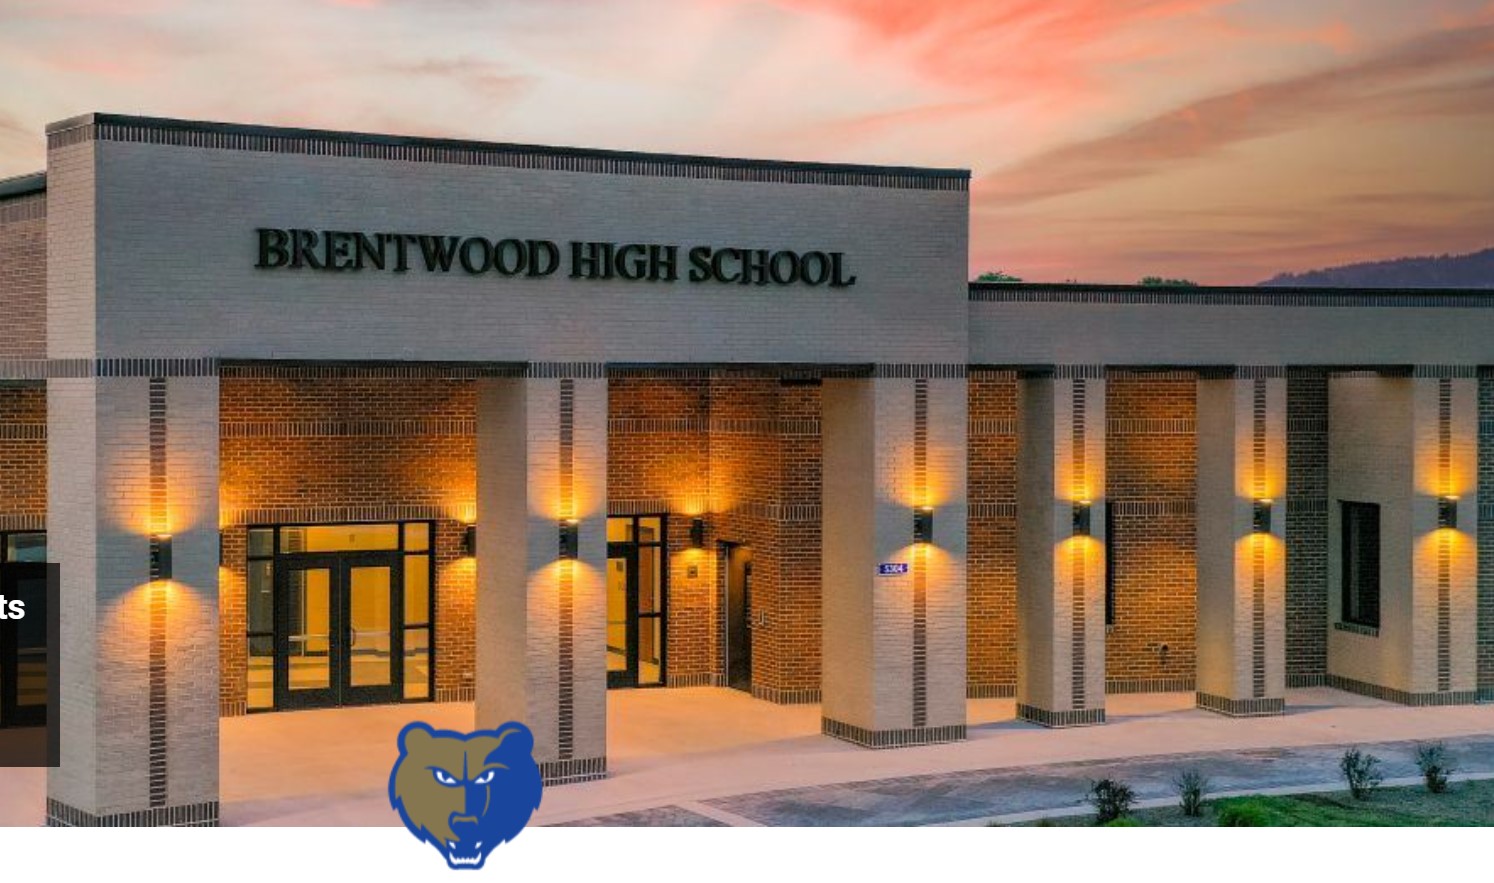 Brentwood High School